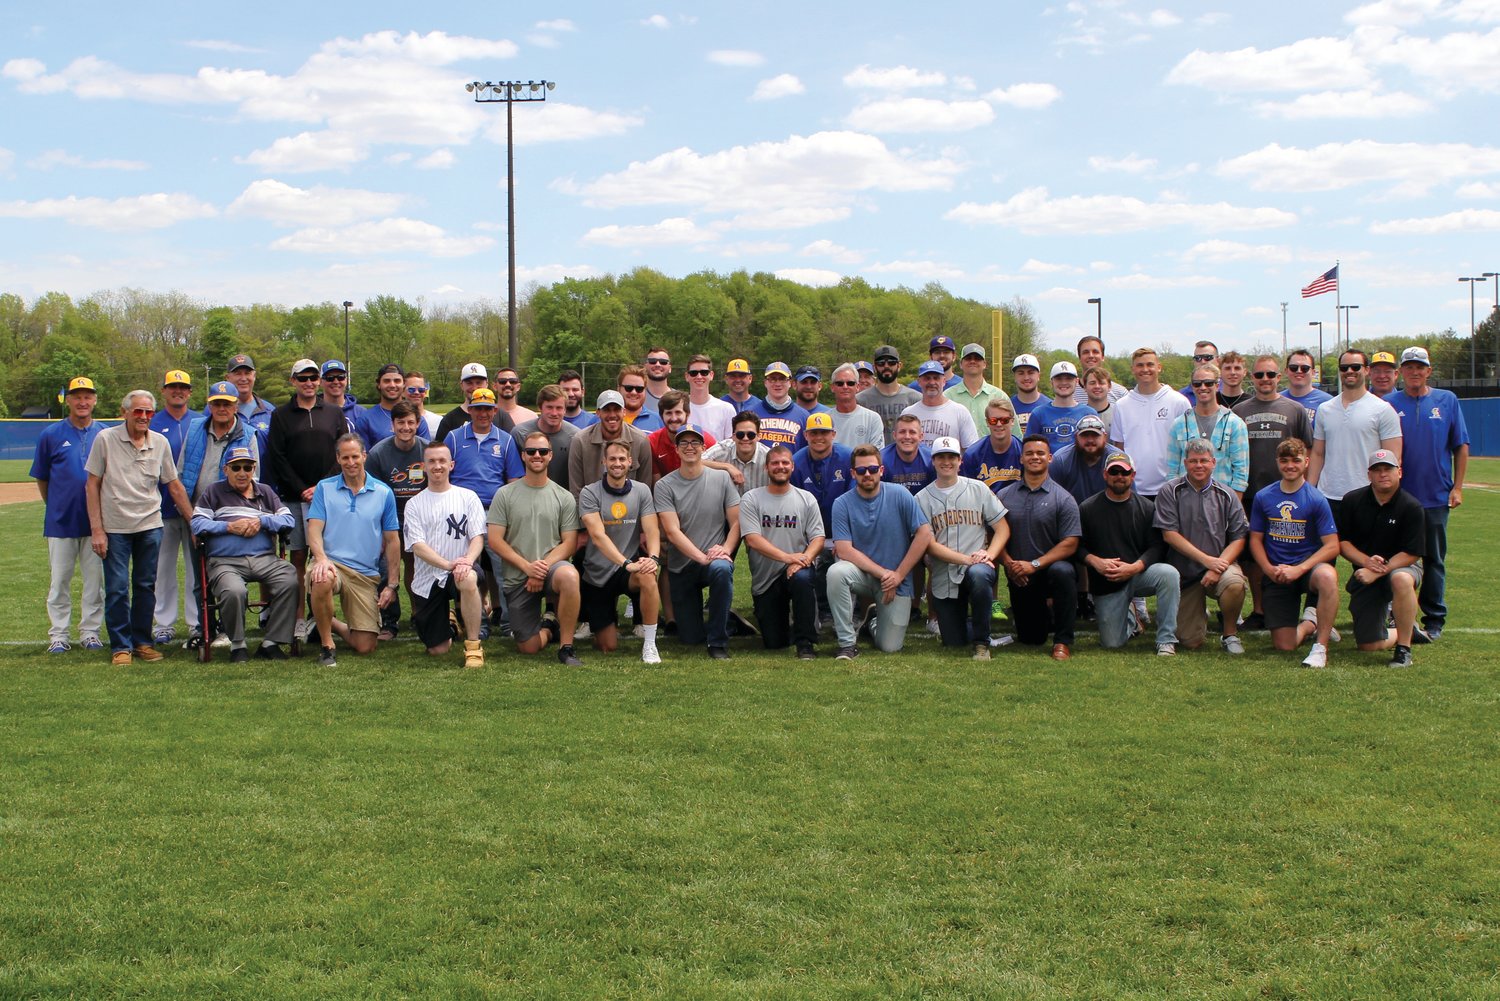 Crawfordsville baseball welcomed back over 60 alumni last Saturday afternoon.